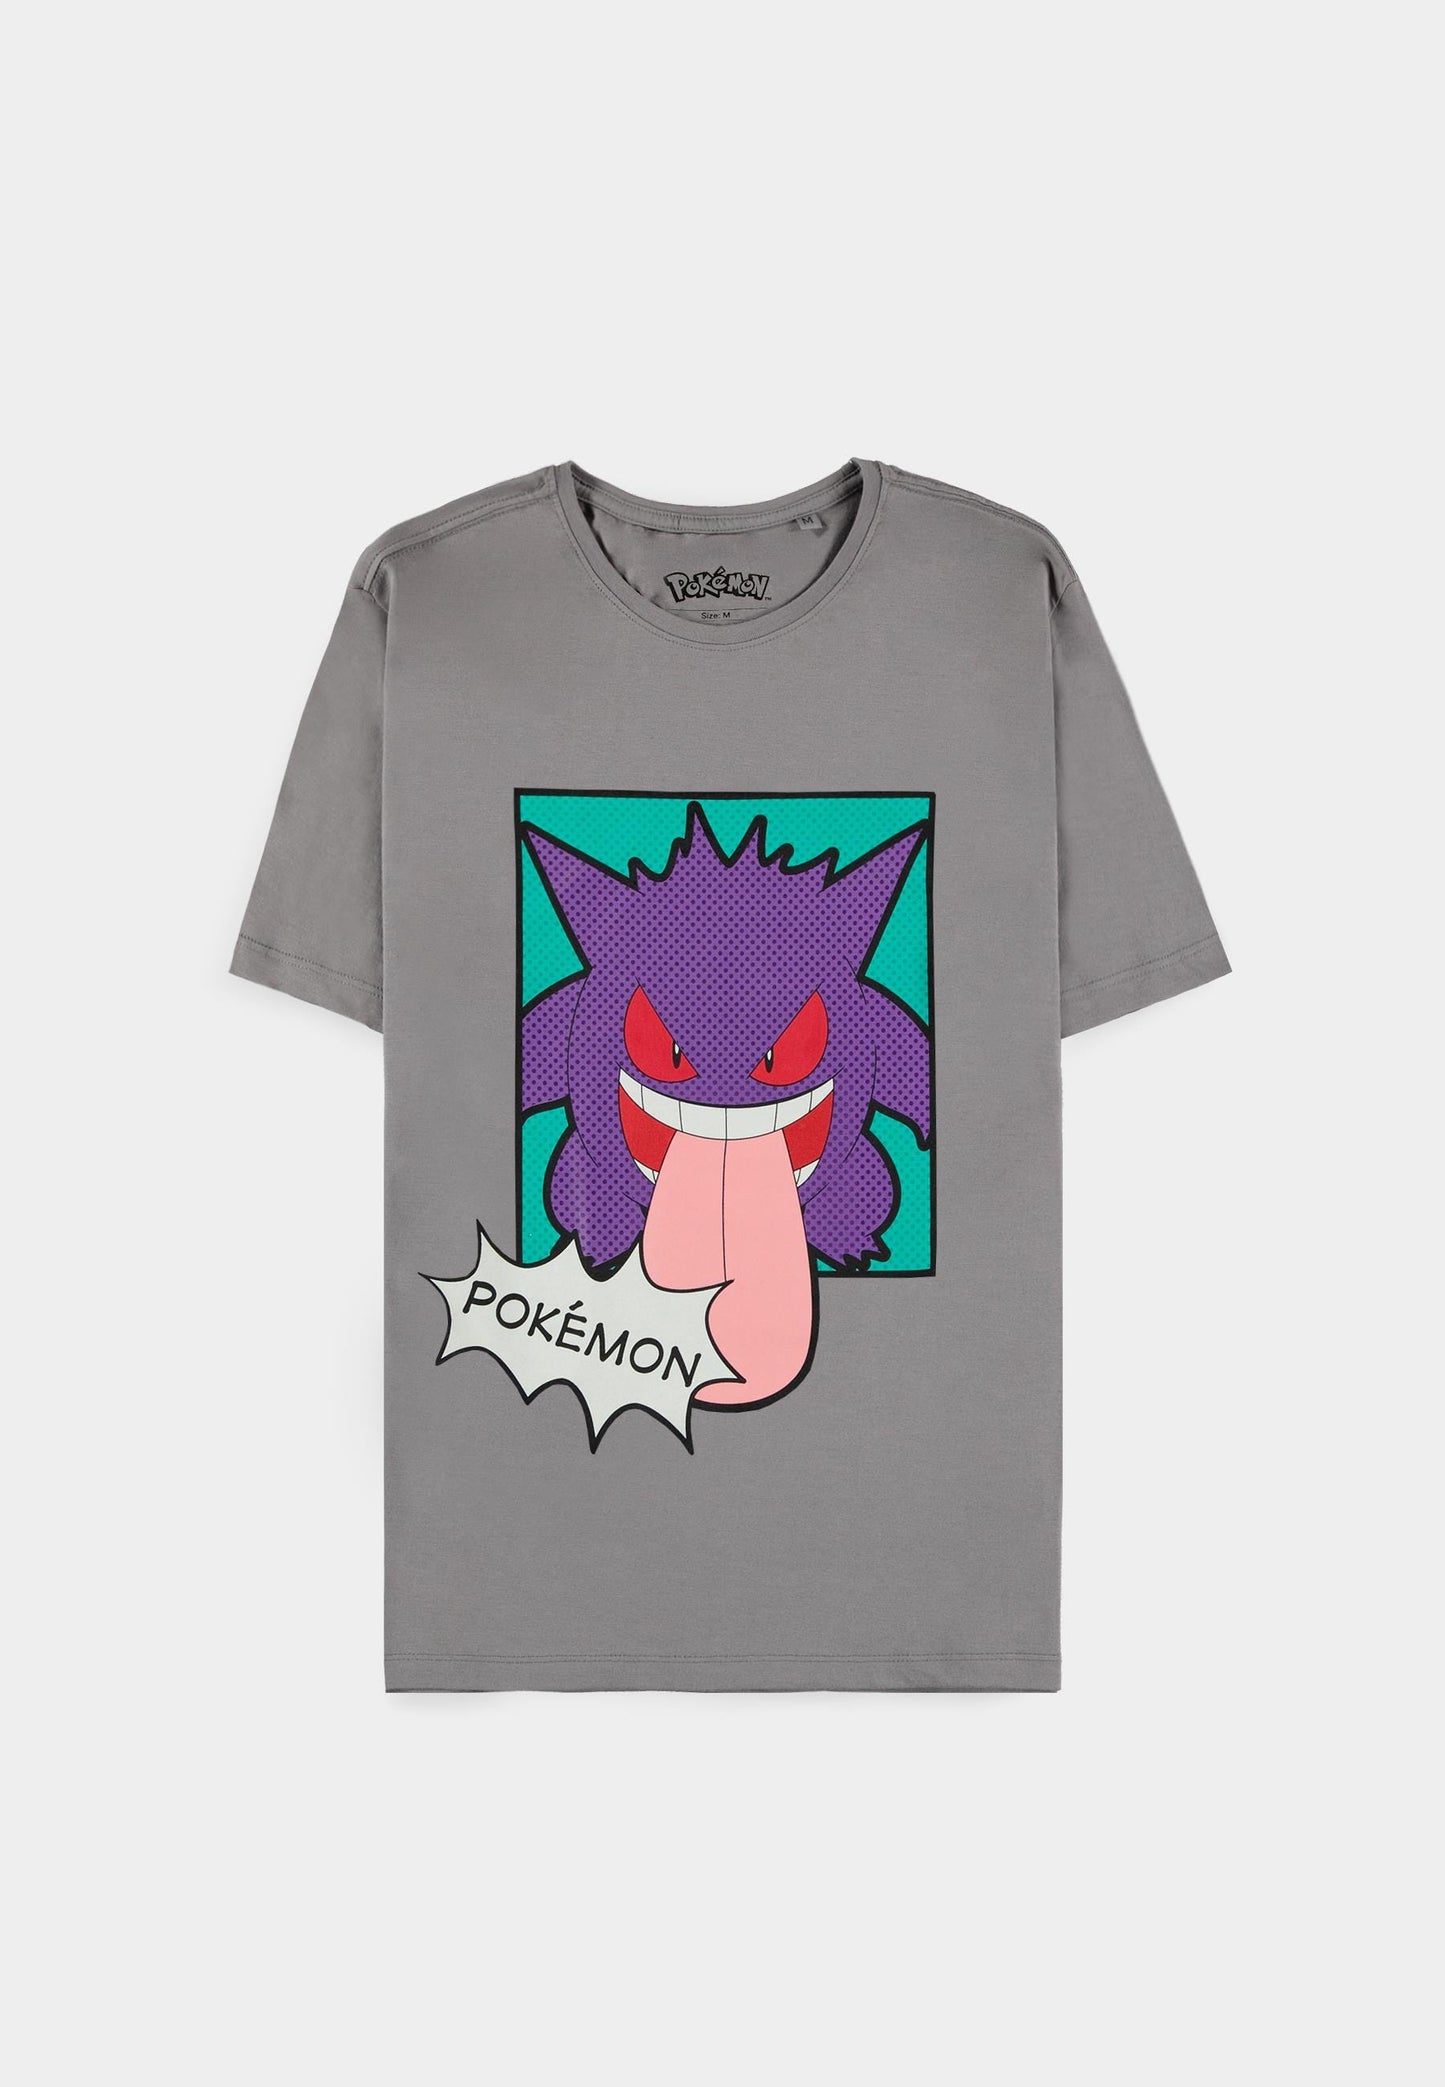 Pokémon - Gengar - Men's Short Sleeved T-shirt